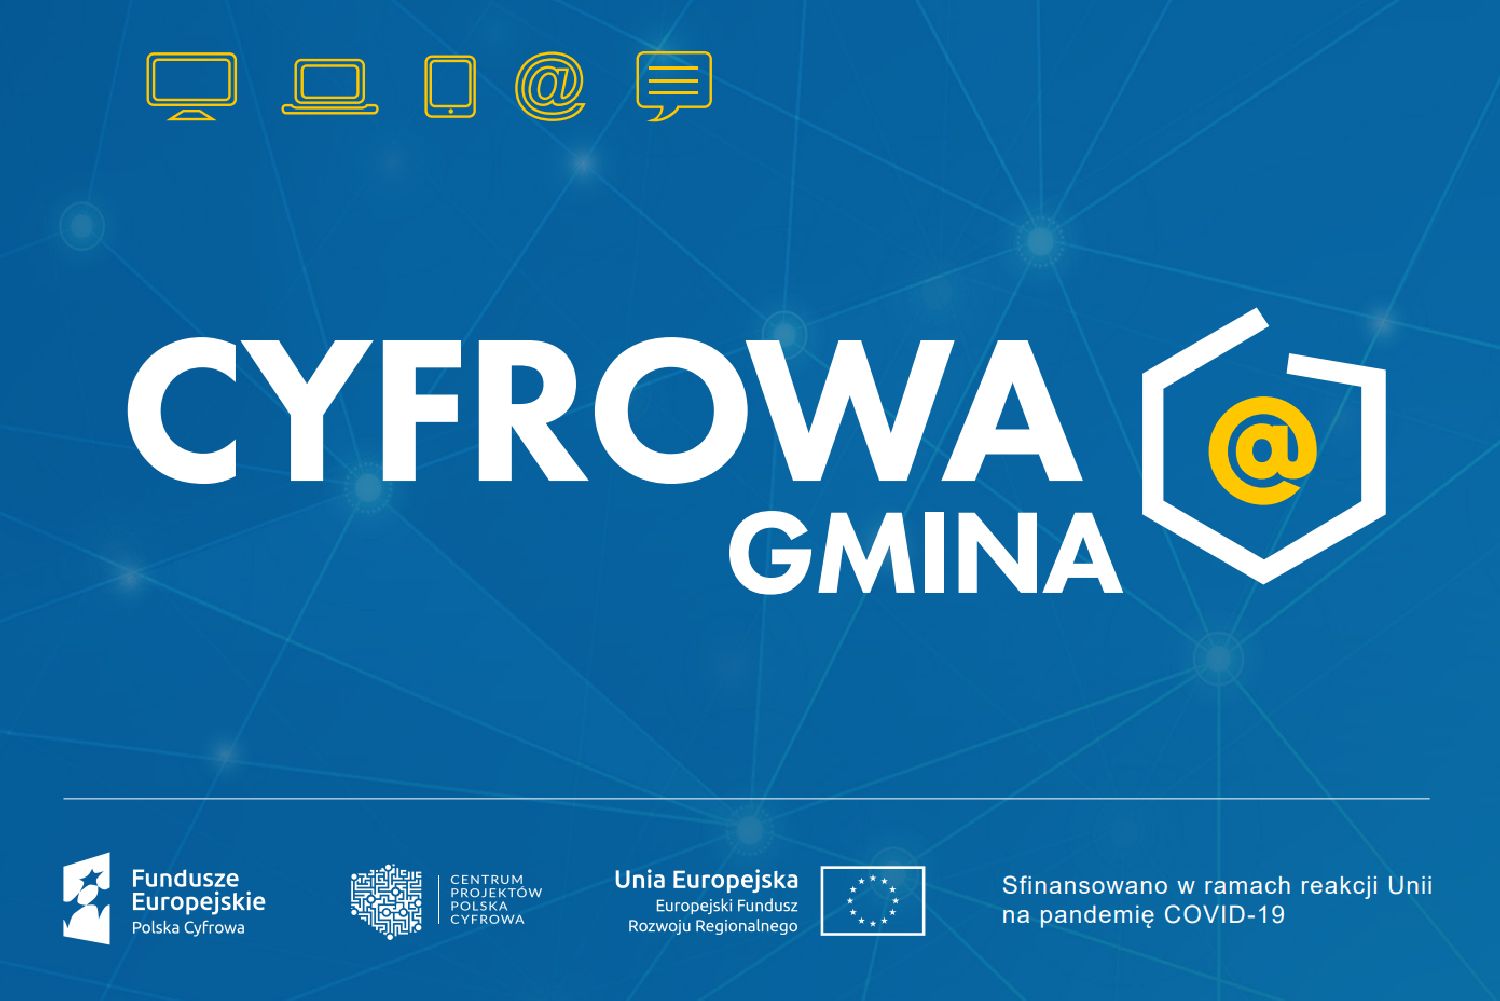 plakat promujący projekt Cyfrowa Gmina